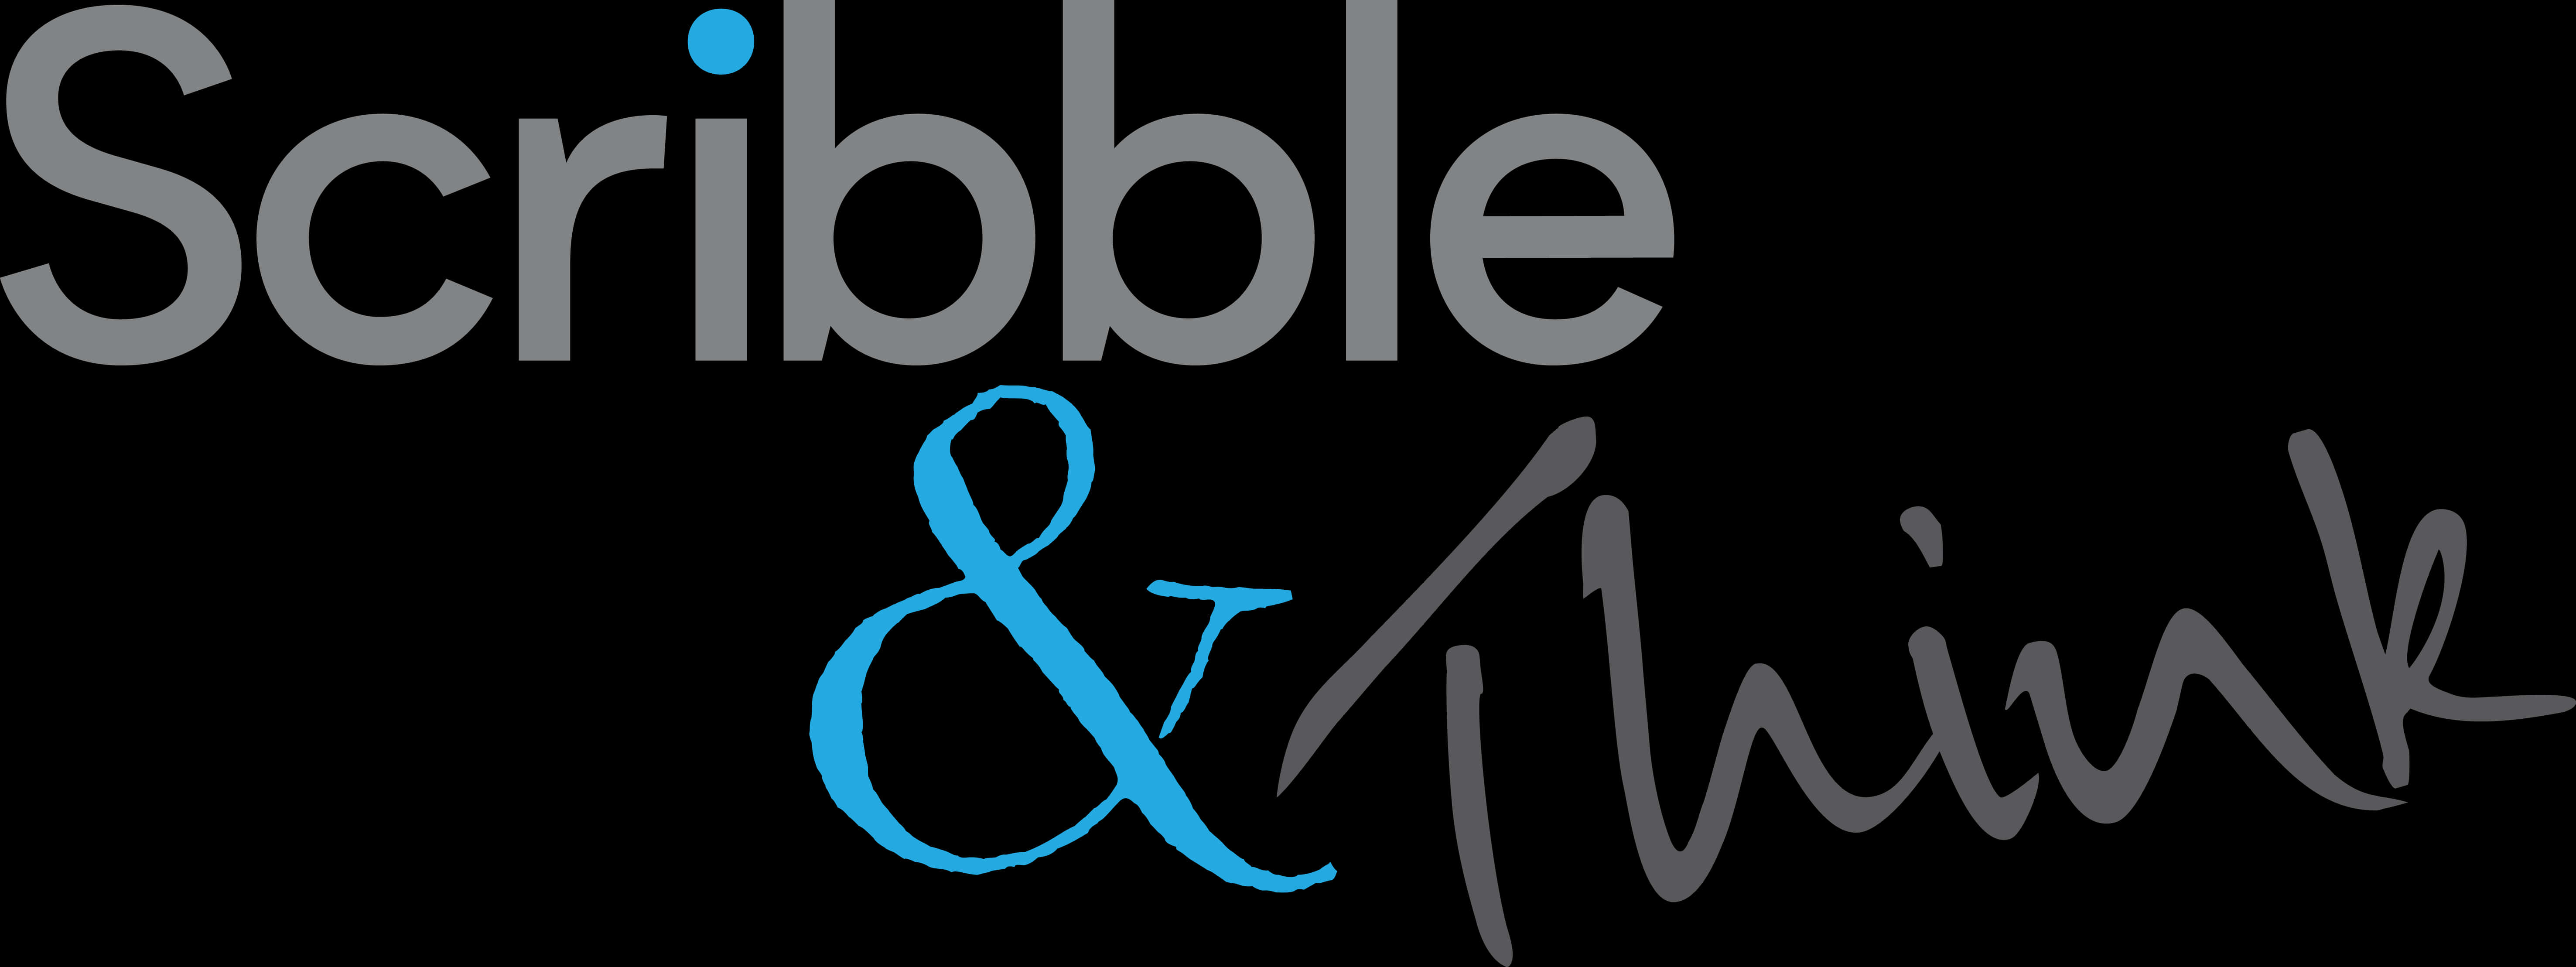 Scribbleand Think Logo PNG image